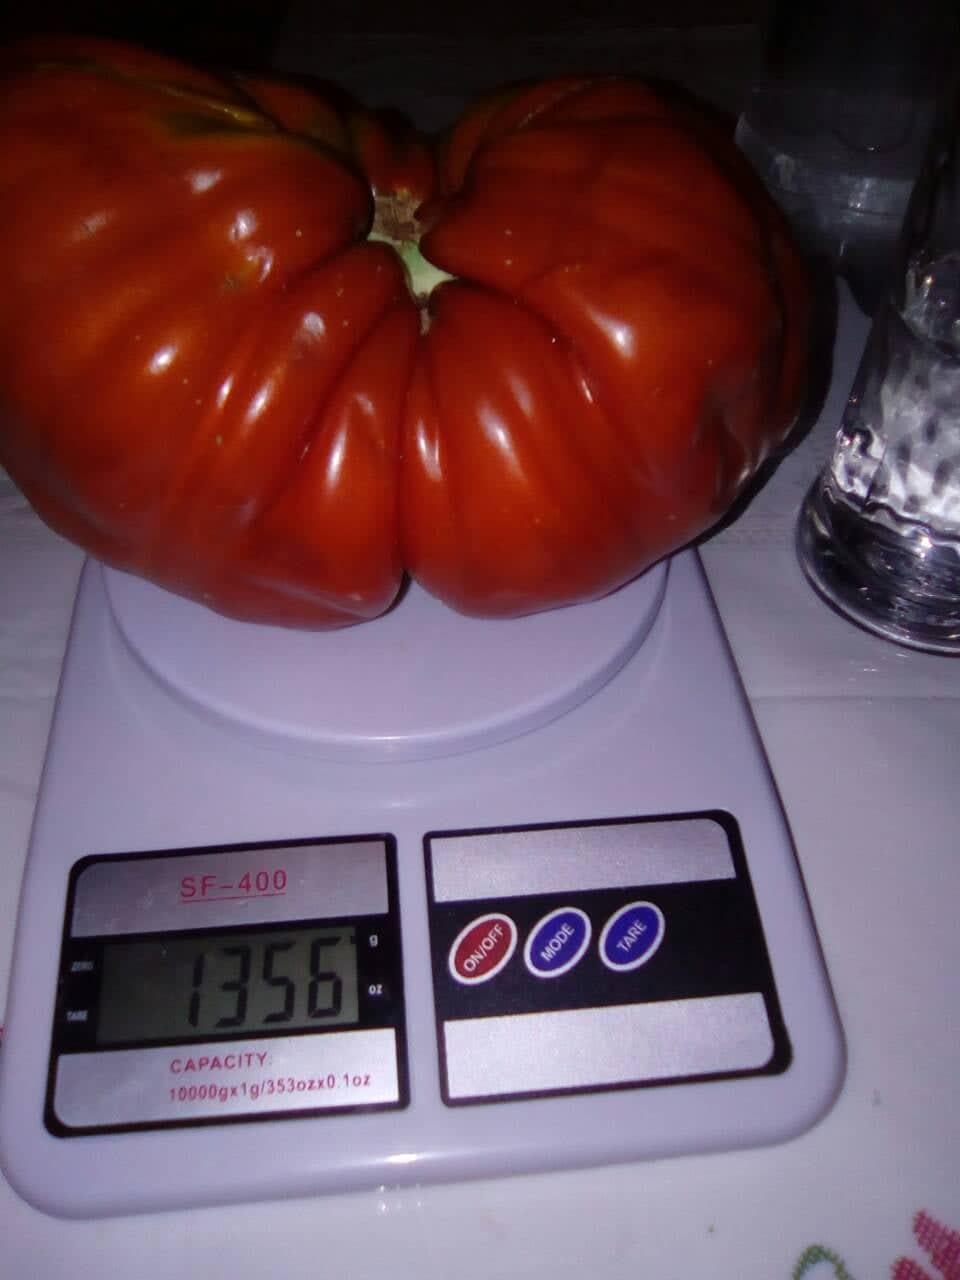 Džinovski paradajz - Avaz